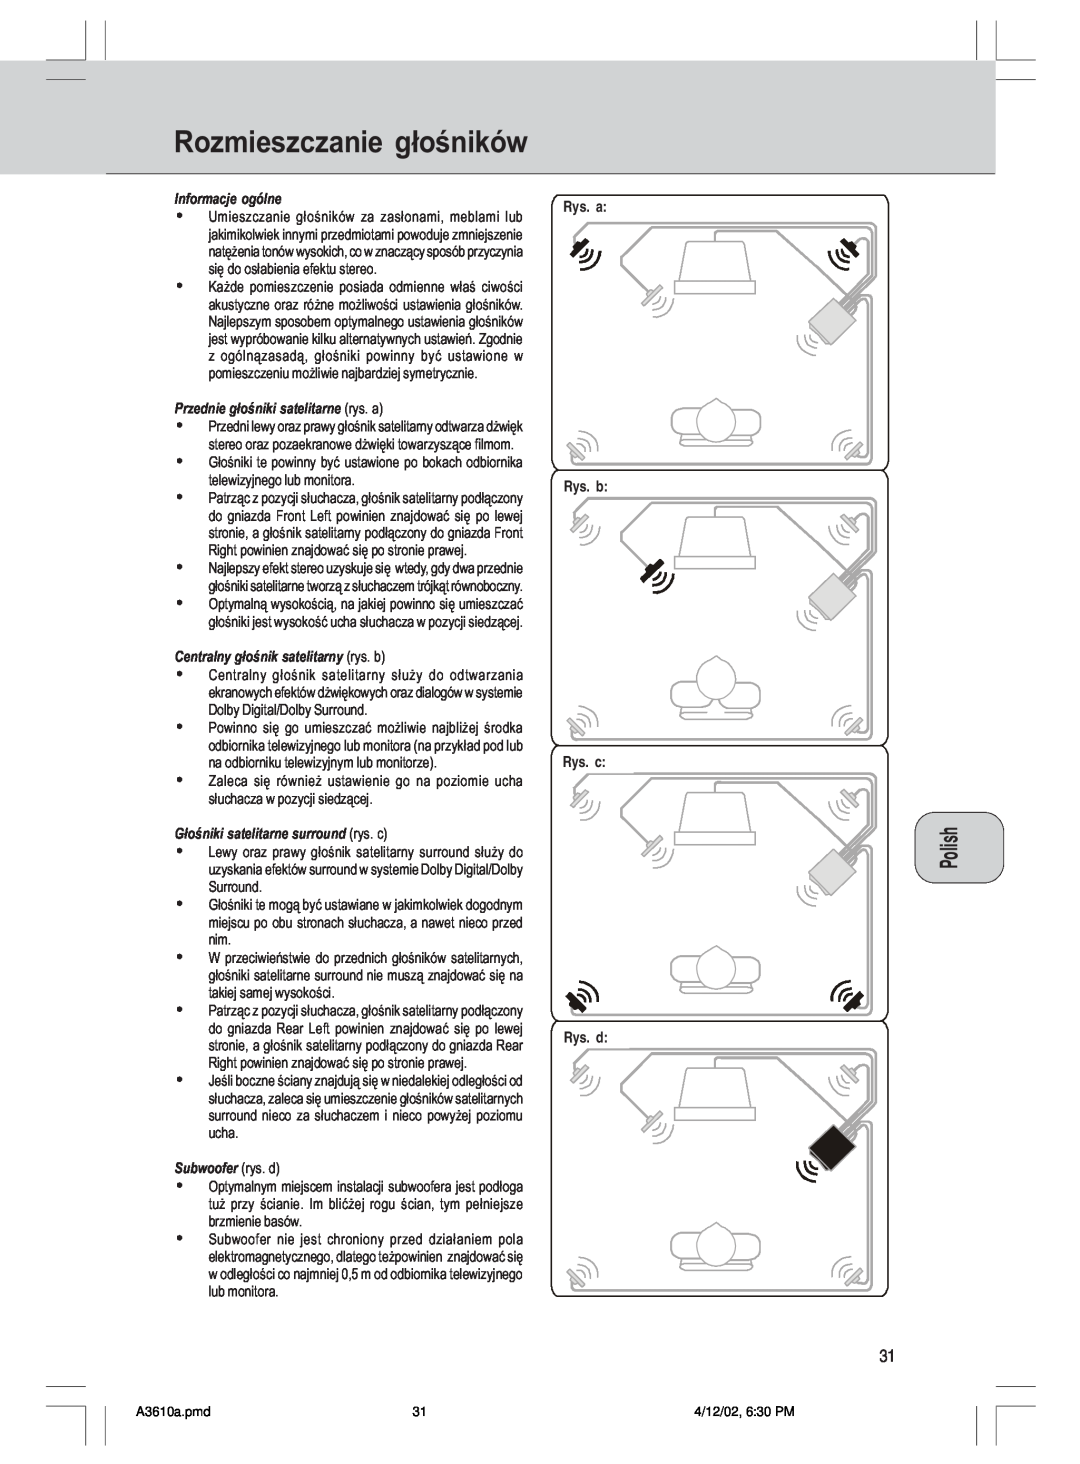 Philips MMS316, A3.610 manual Rozmieszczanie g˘o˙nikÛw, Turkish, Russian, Norwegian, Danish 